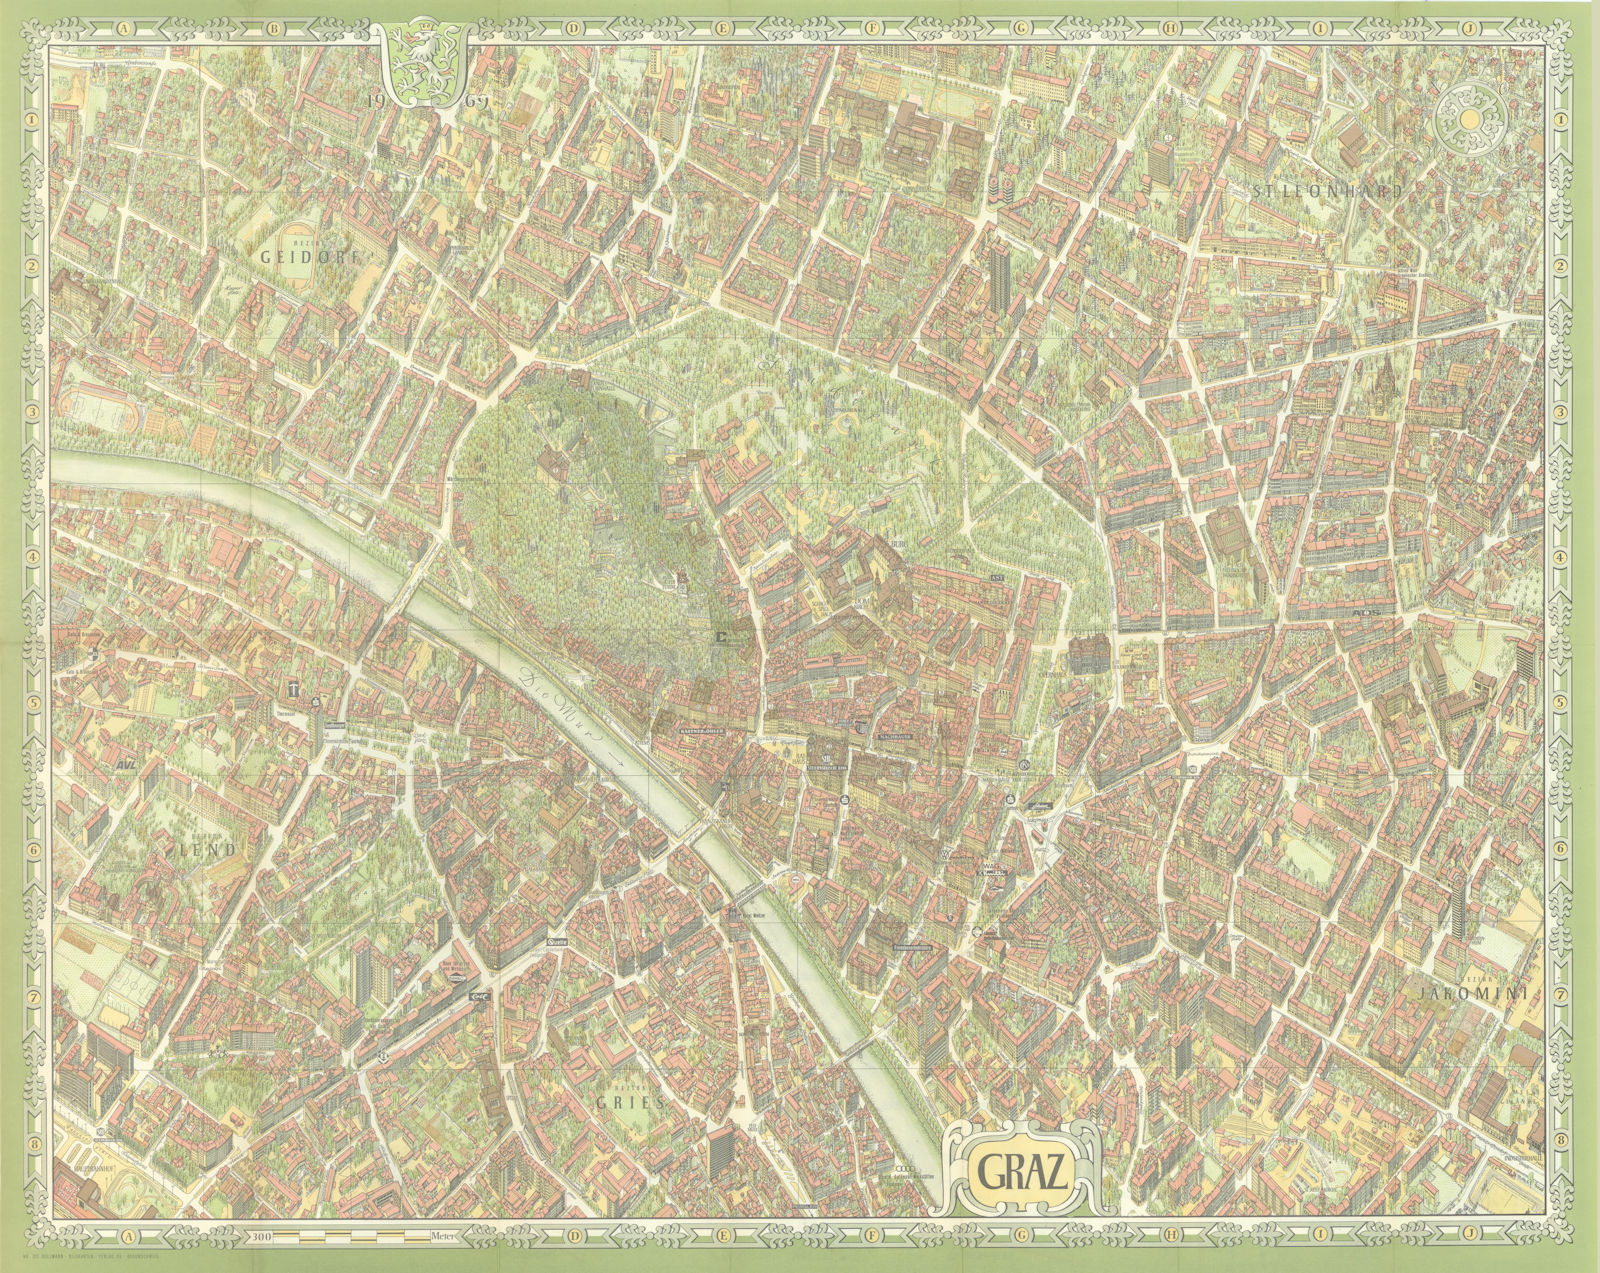 Graz pictorial bird's eye view city plan. Austria. #102 BOLLMANN 1969 old map